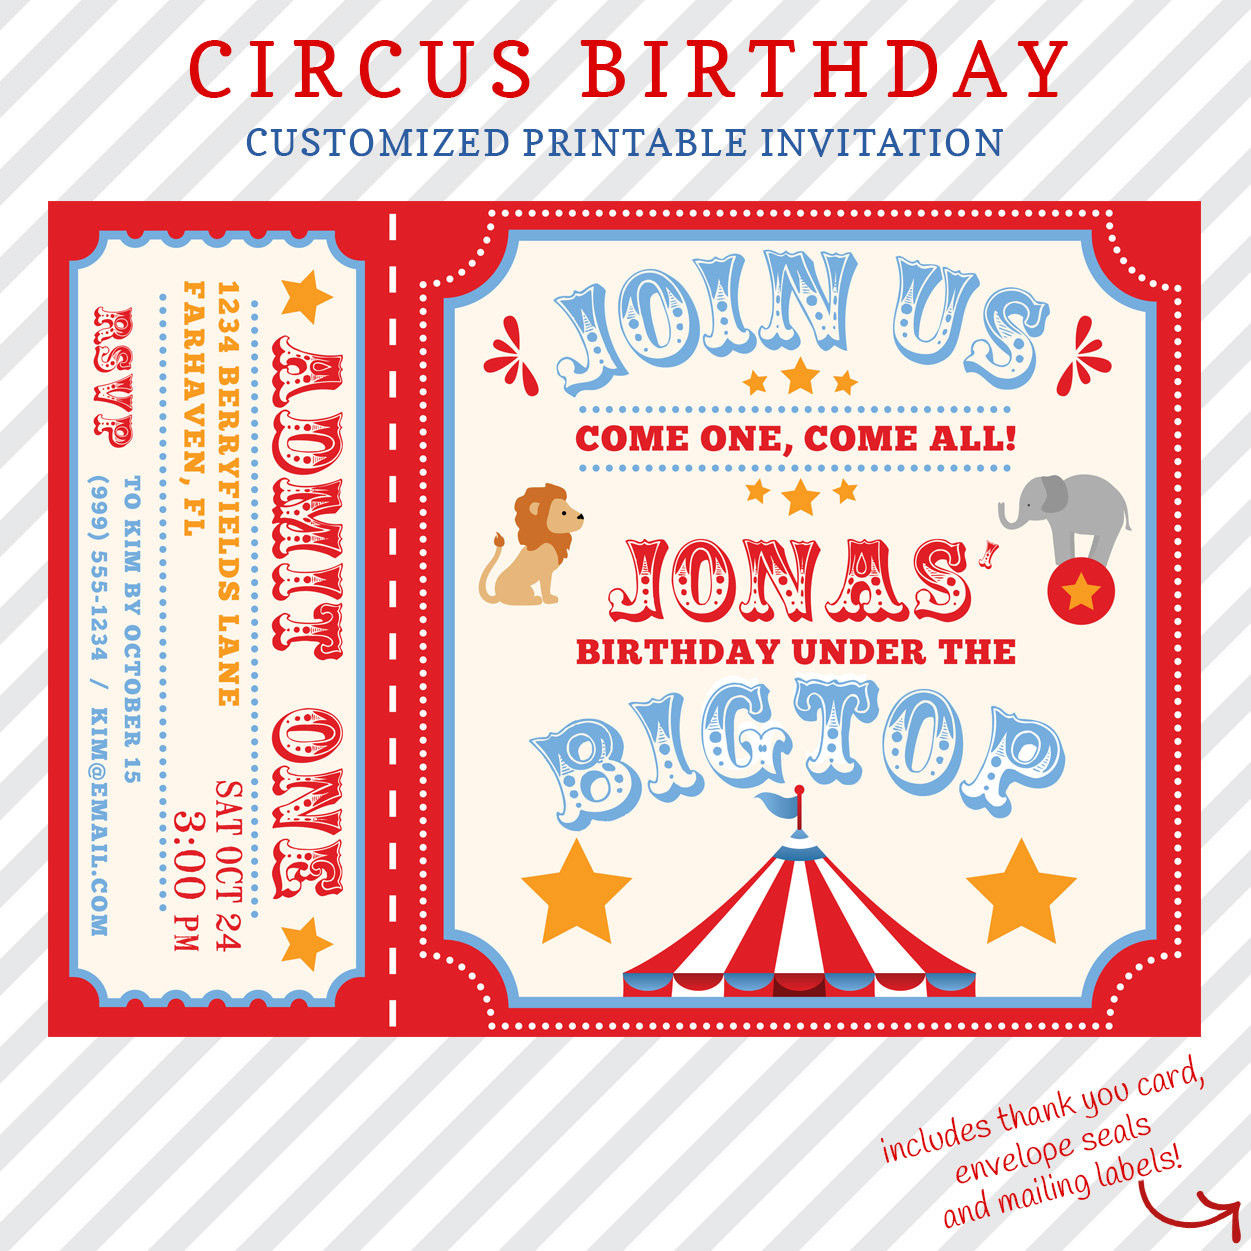 Best ideas about Custom Birthday Invitations Free
. Save or Pin Circus Birthday Invitation Printable custom invitation with Now.